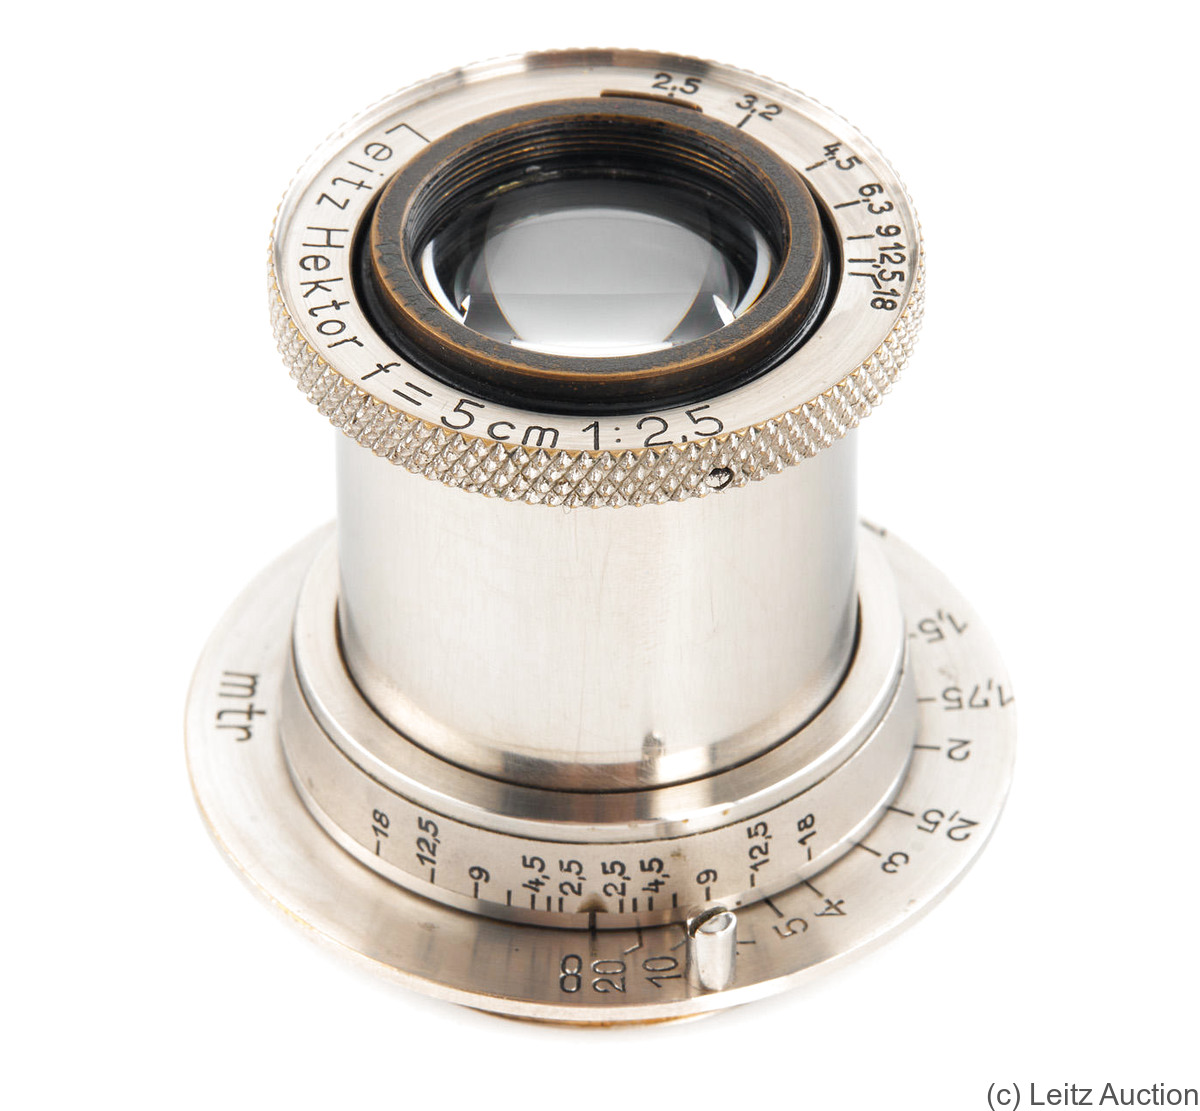 Leitz: 50mm (5cm) f2.5 Hektor (SM) Lens Price Guide: estimate your 